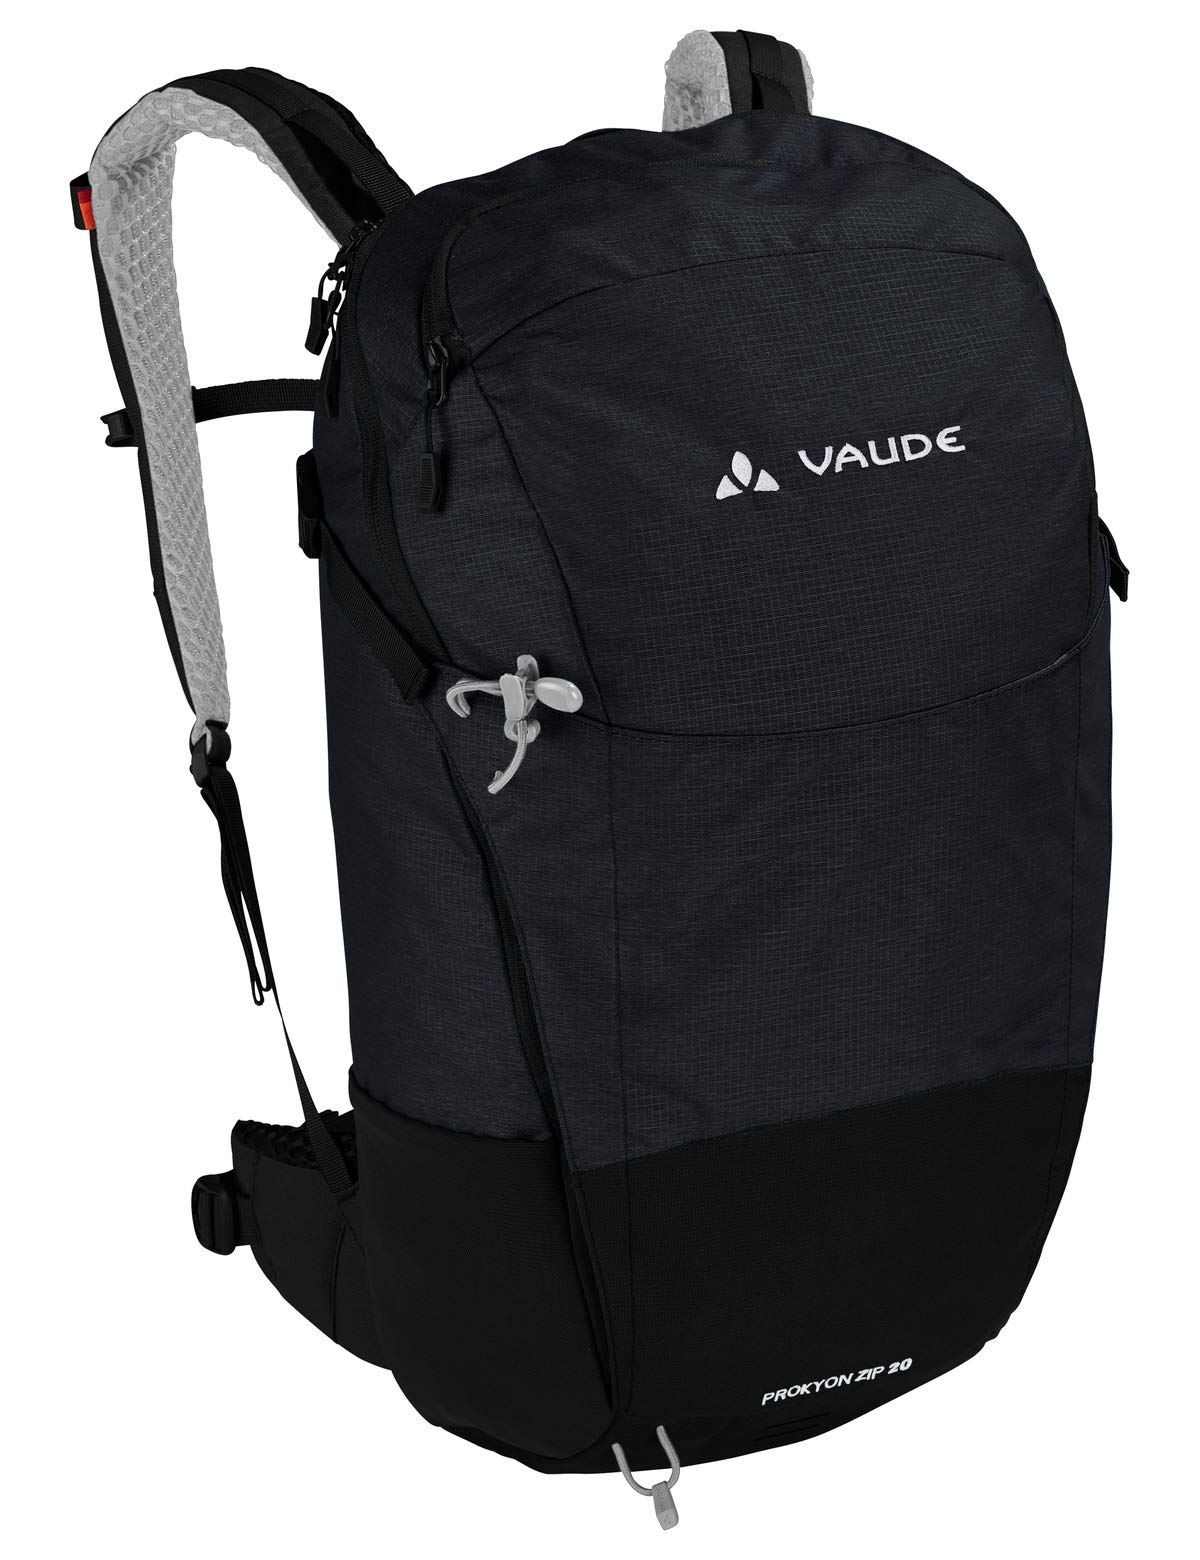 VAUDE Rucksaecke20-29l Prokyon Zip 20, Kompakter Wander- und Outdoorrucksack, black, one Size, 141360100